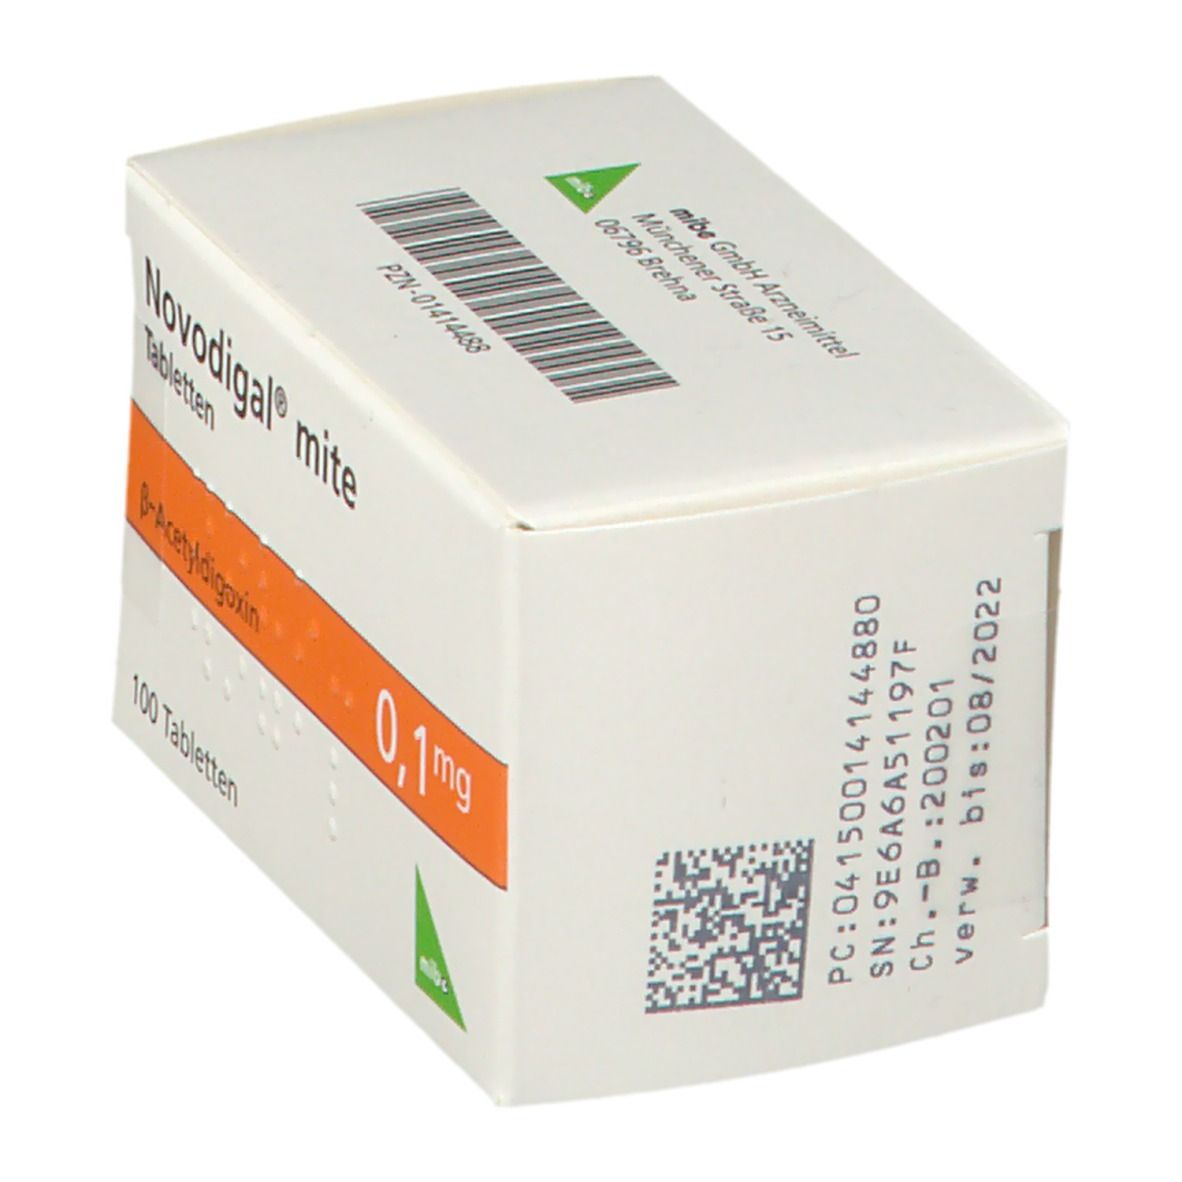 Novodigal® mite 0,1 mg